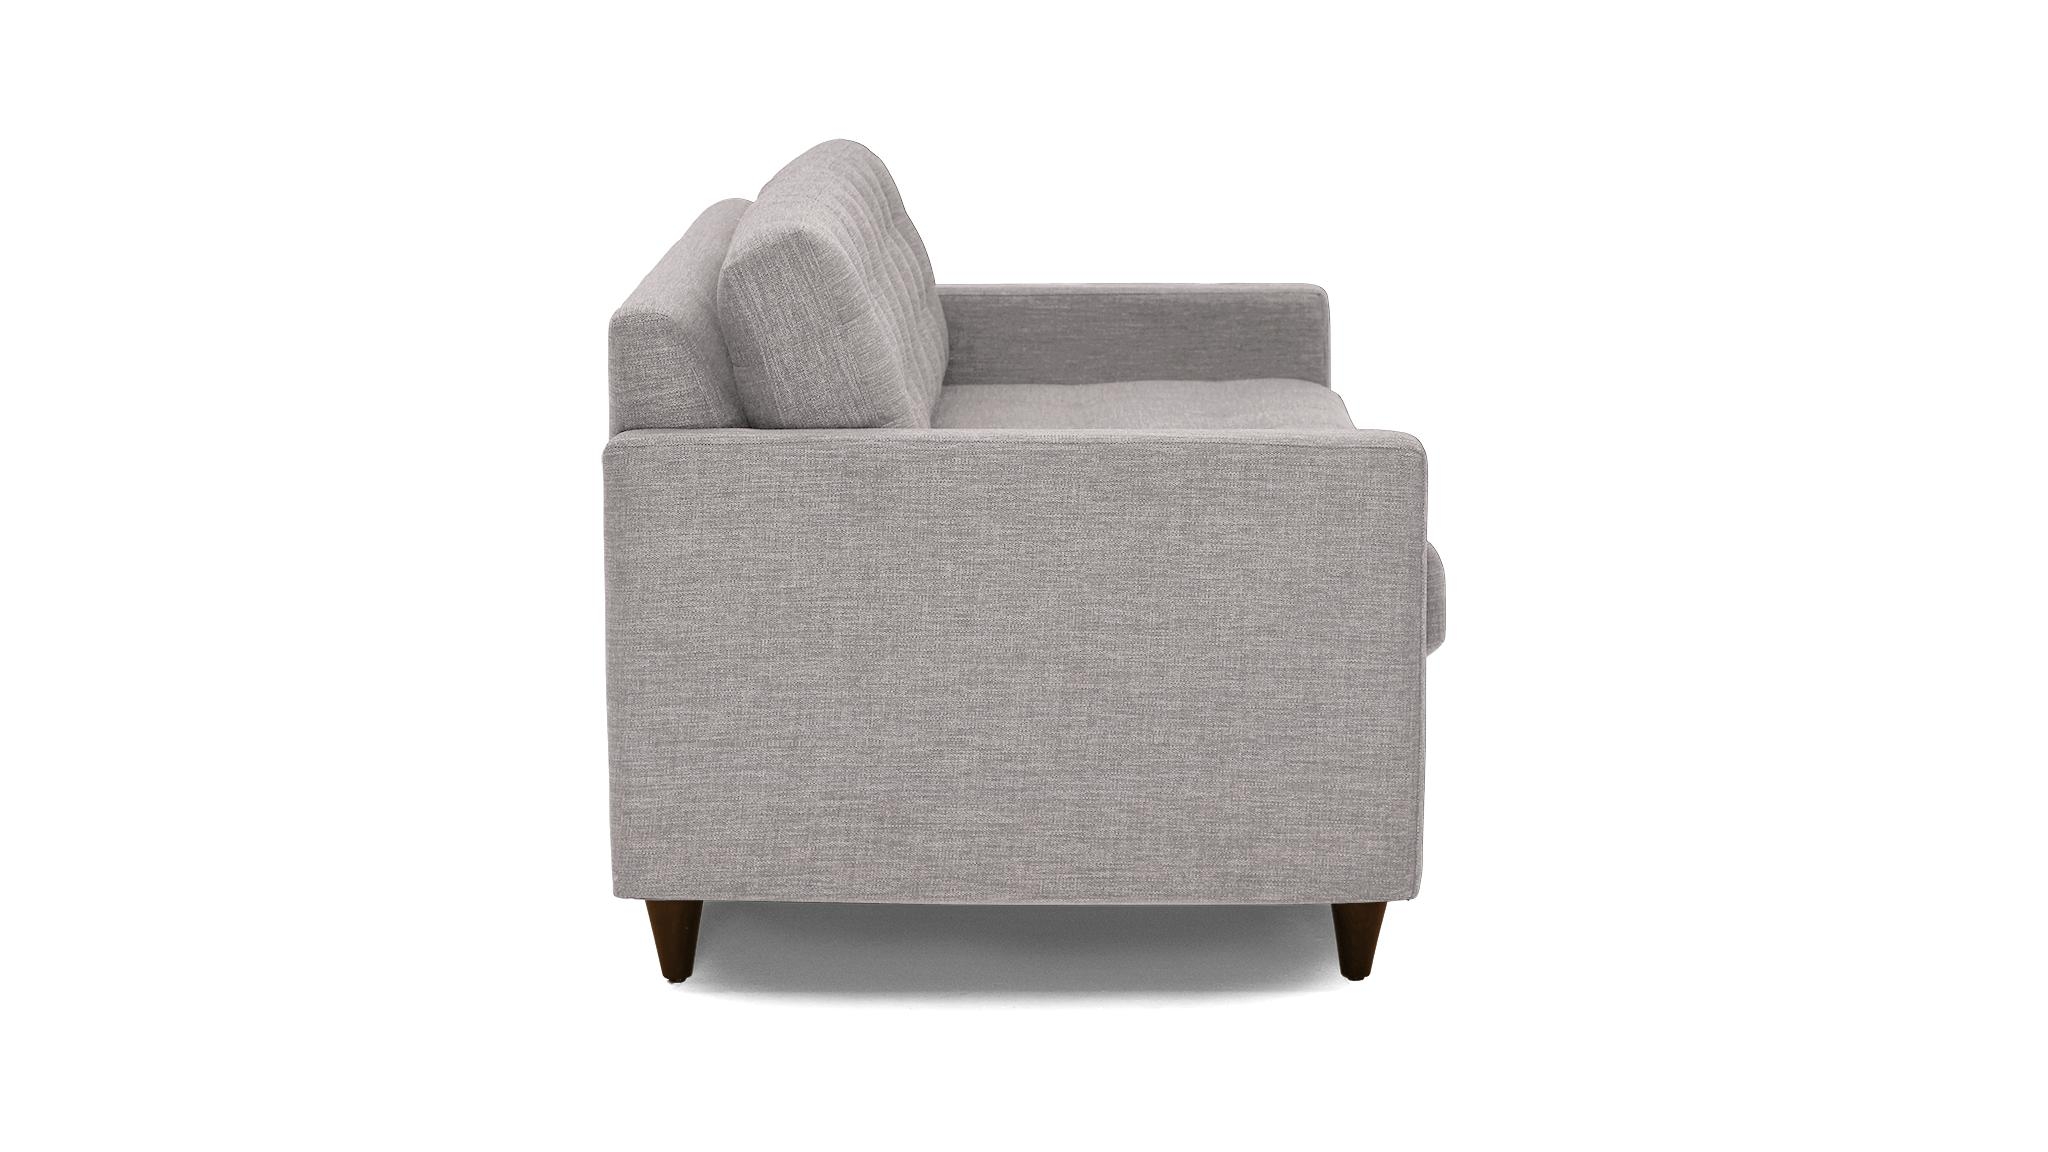 Purple Eliot Mid Century Modern Sleeper Sofa - Sunbrella Premier Wisteria - Mocha - Standard Foam - Image 2